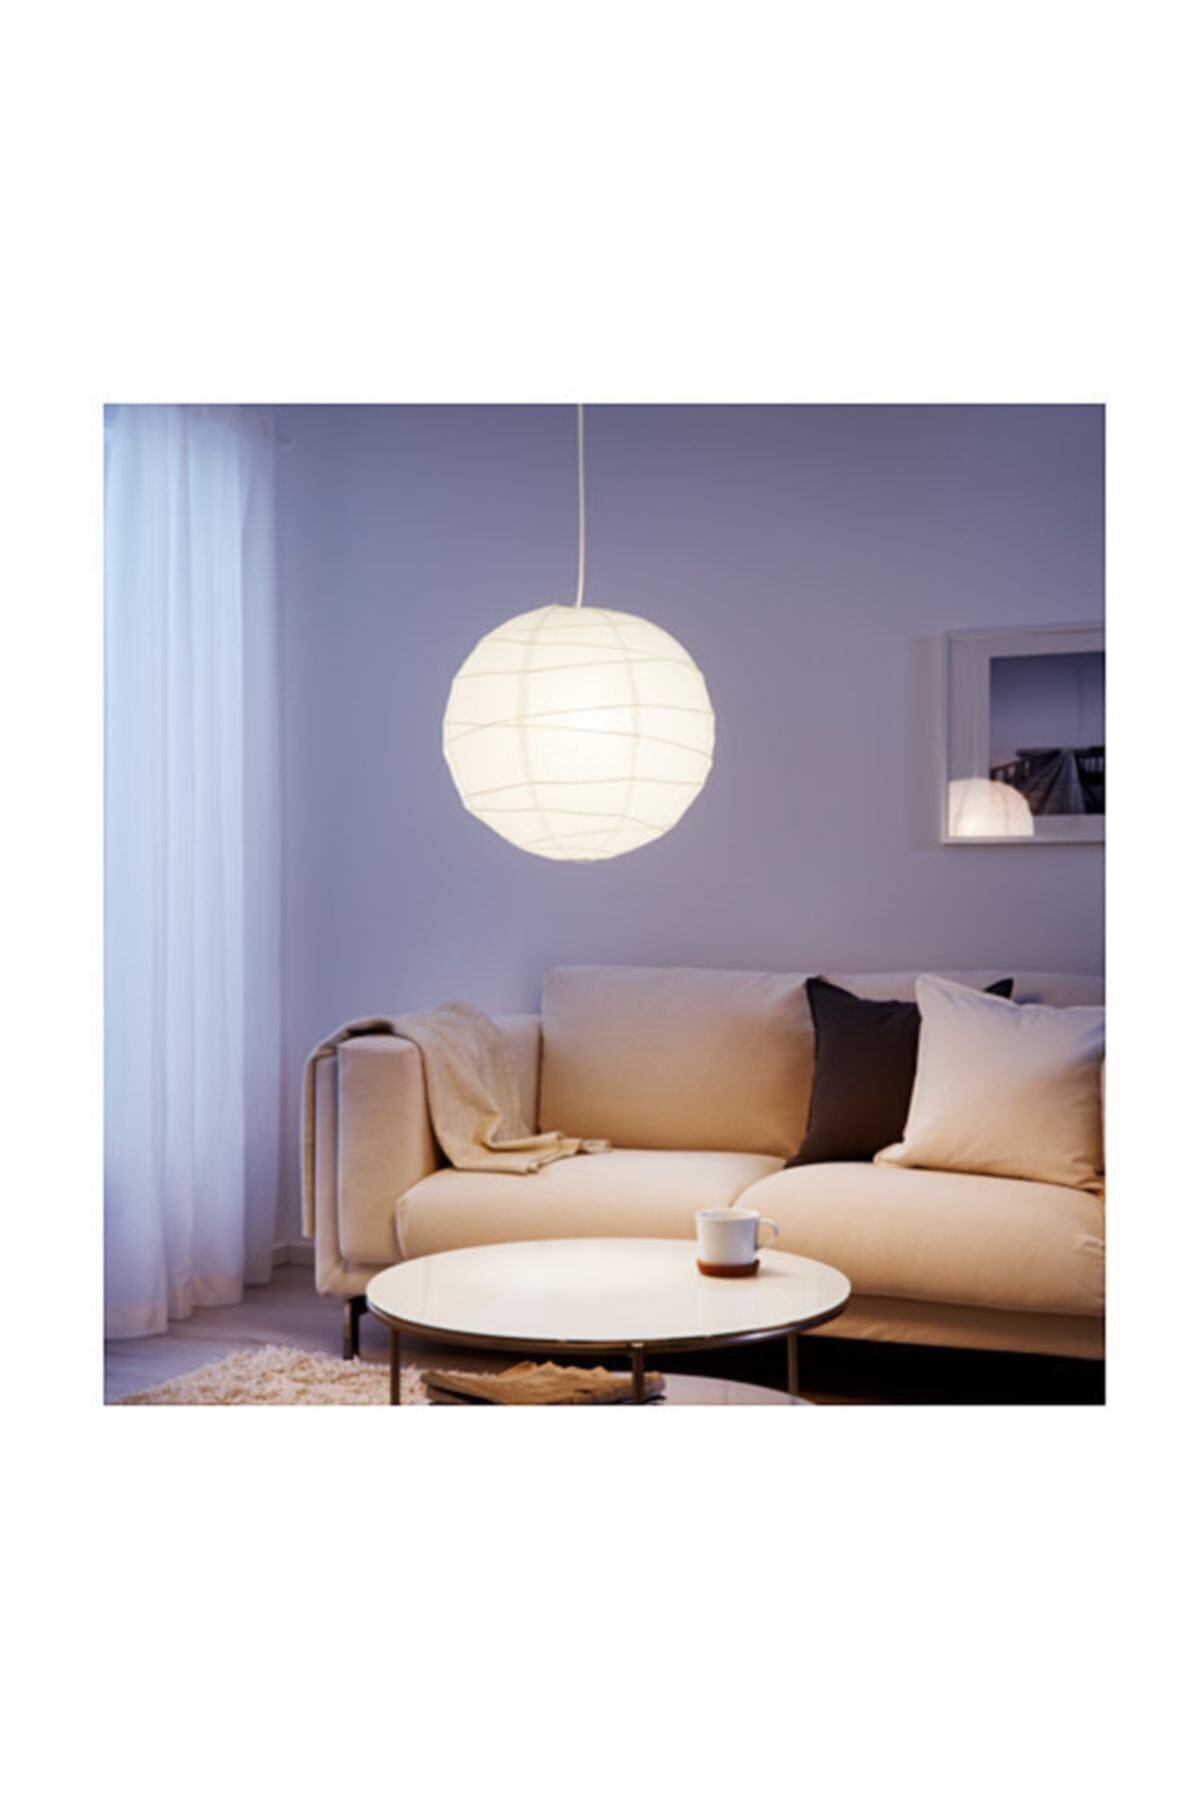 IKEA Regolit Kağıt Japon Feneri Sarkıt Lamba Tavan Lambası 45 Cm